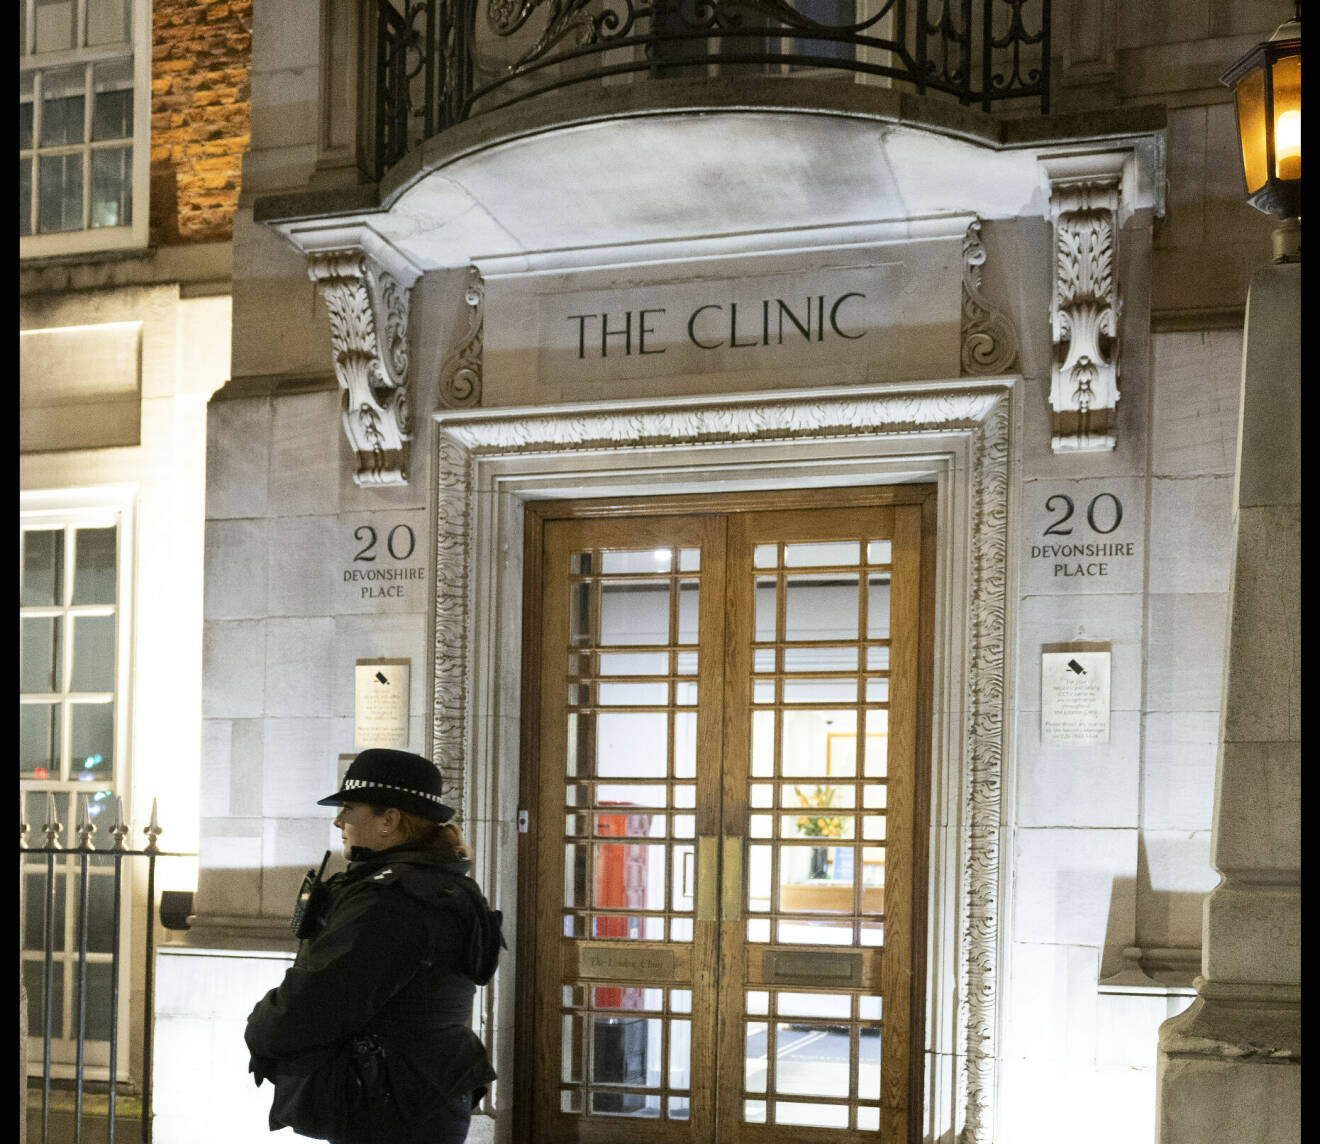 London Clinic